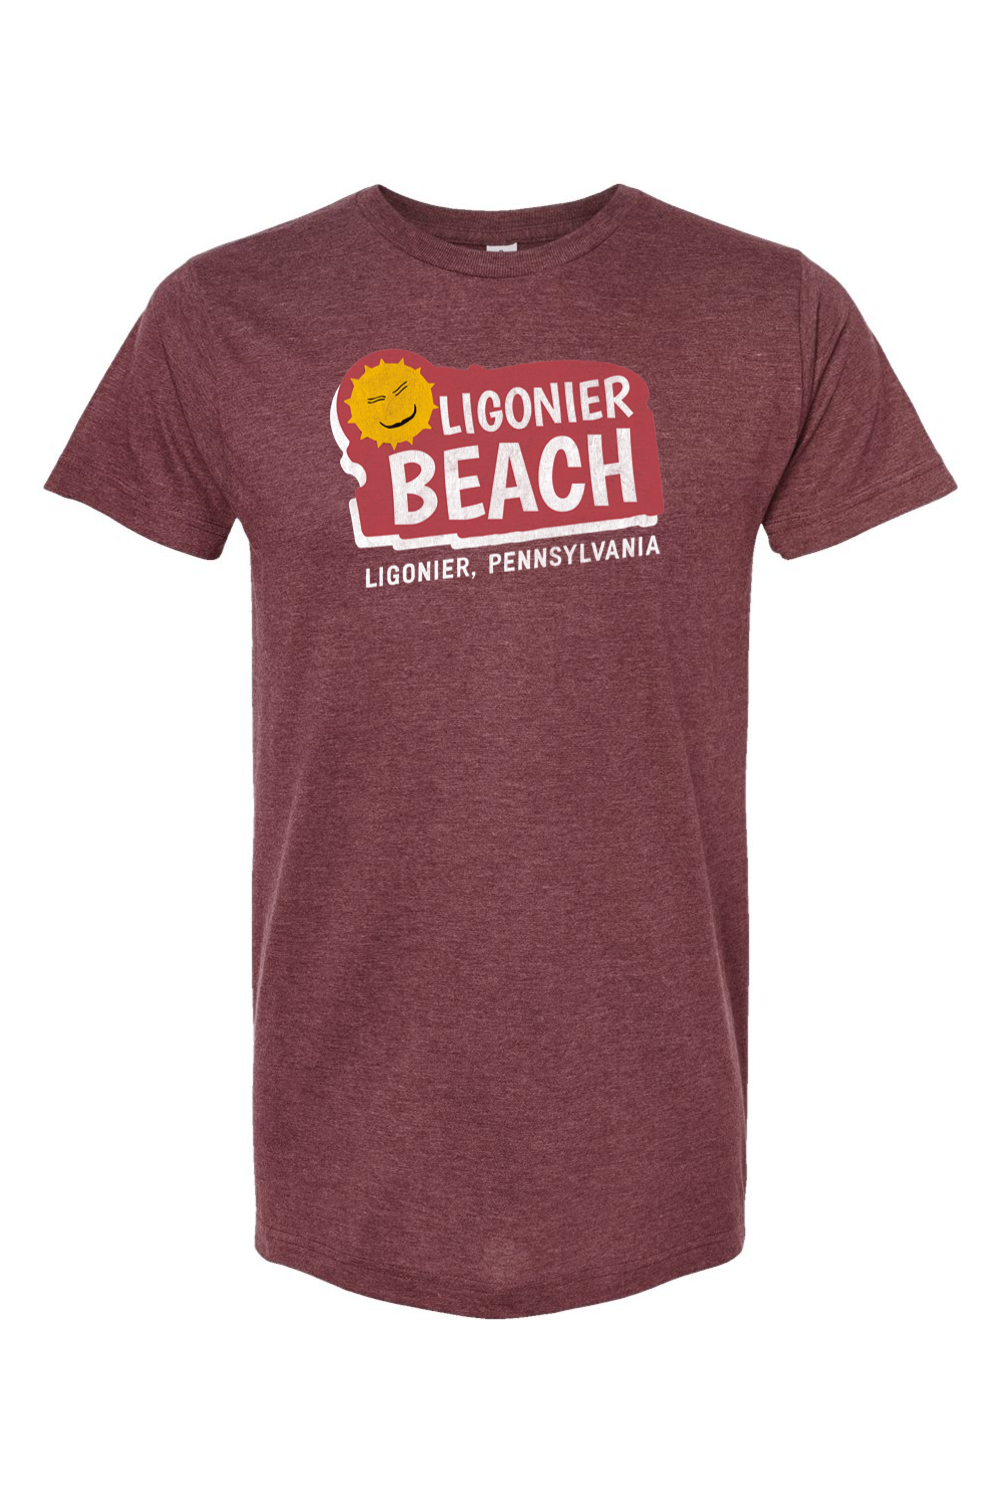 Ligonier Beach - Ligonier, PA - Yinzylvania